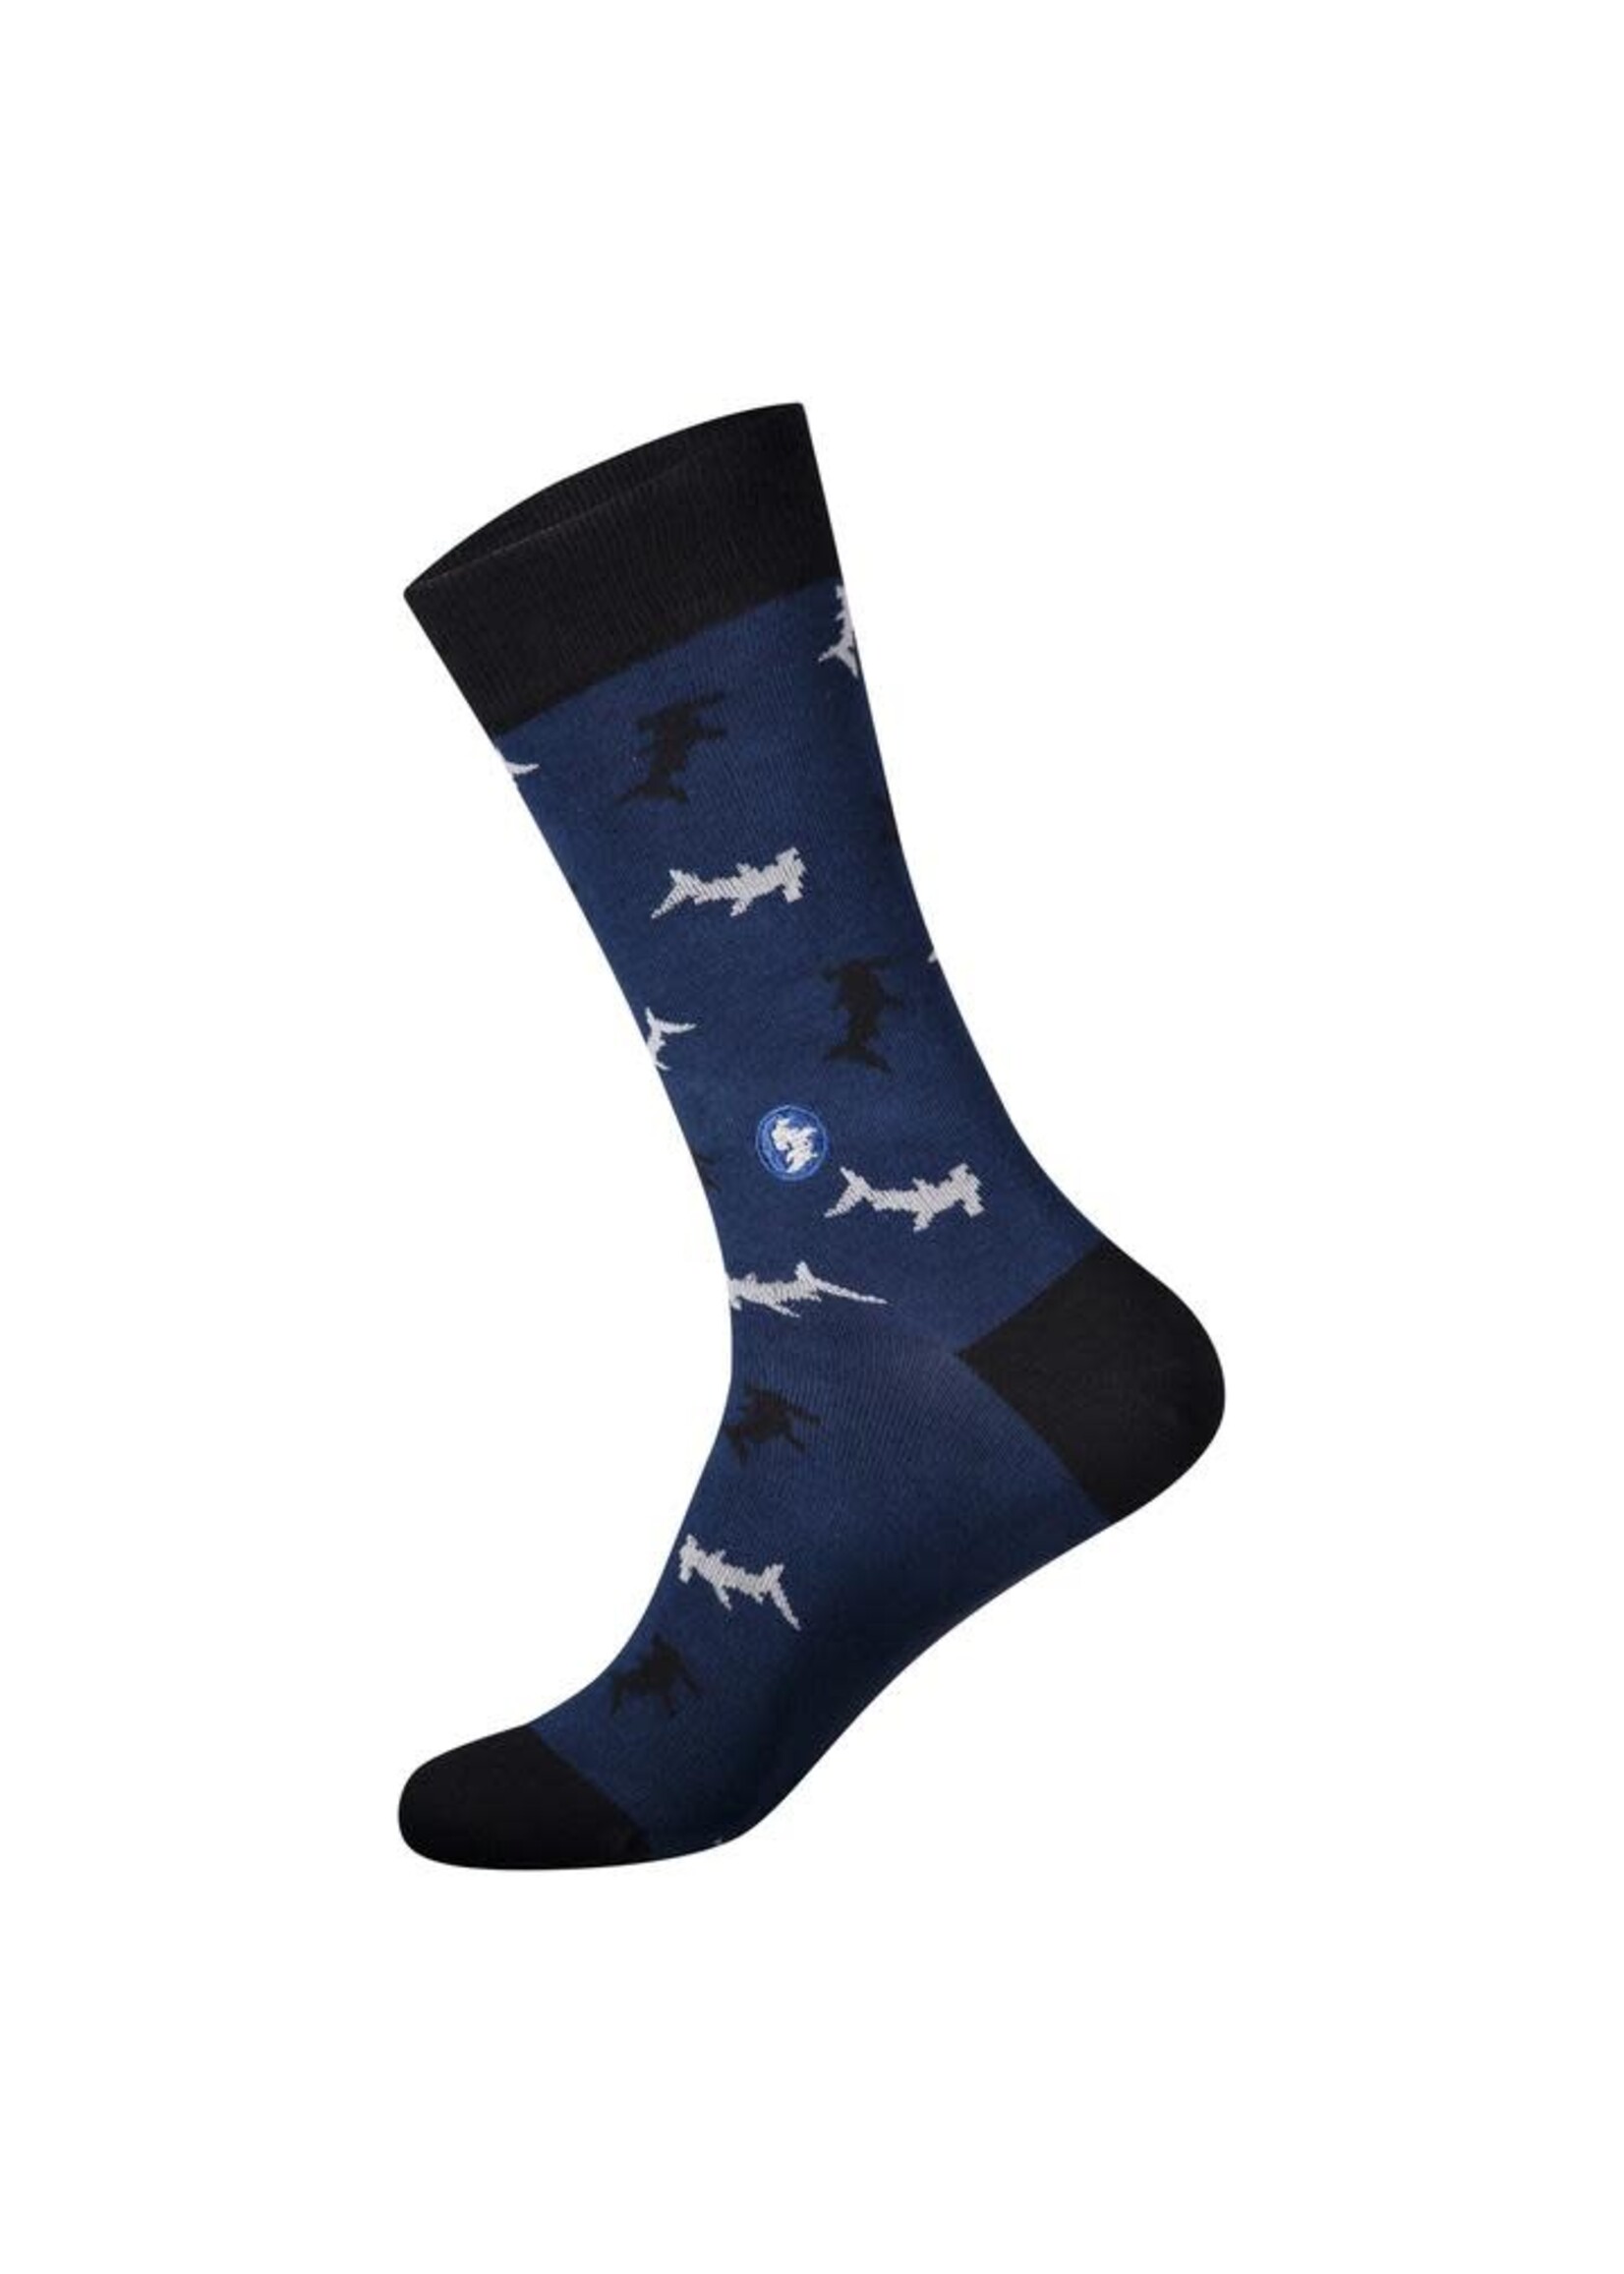 Socks That Protect Sharks